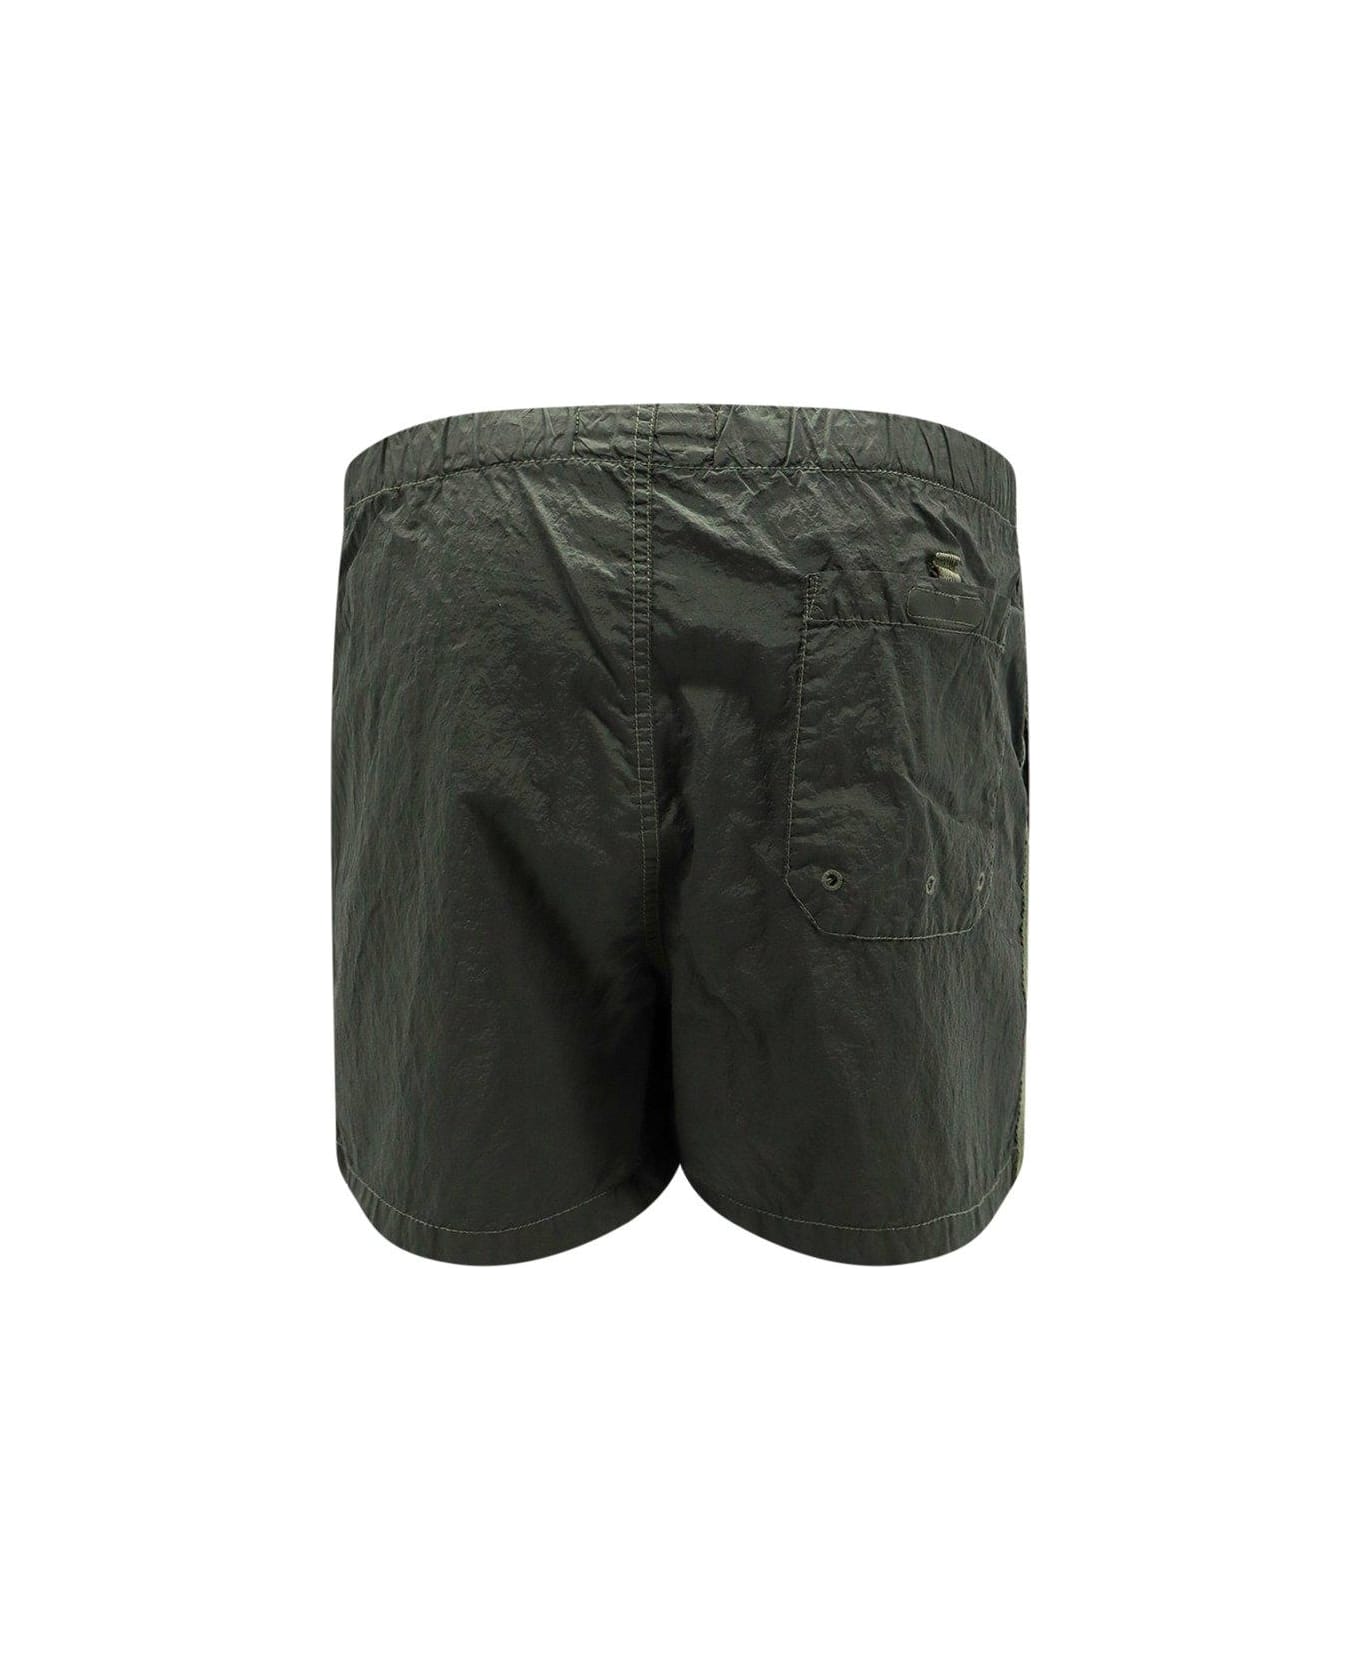 Stone Island Compass Patch Swim Shorts - Green ショートパンツ